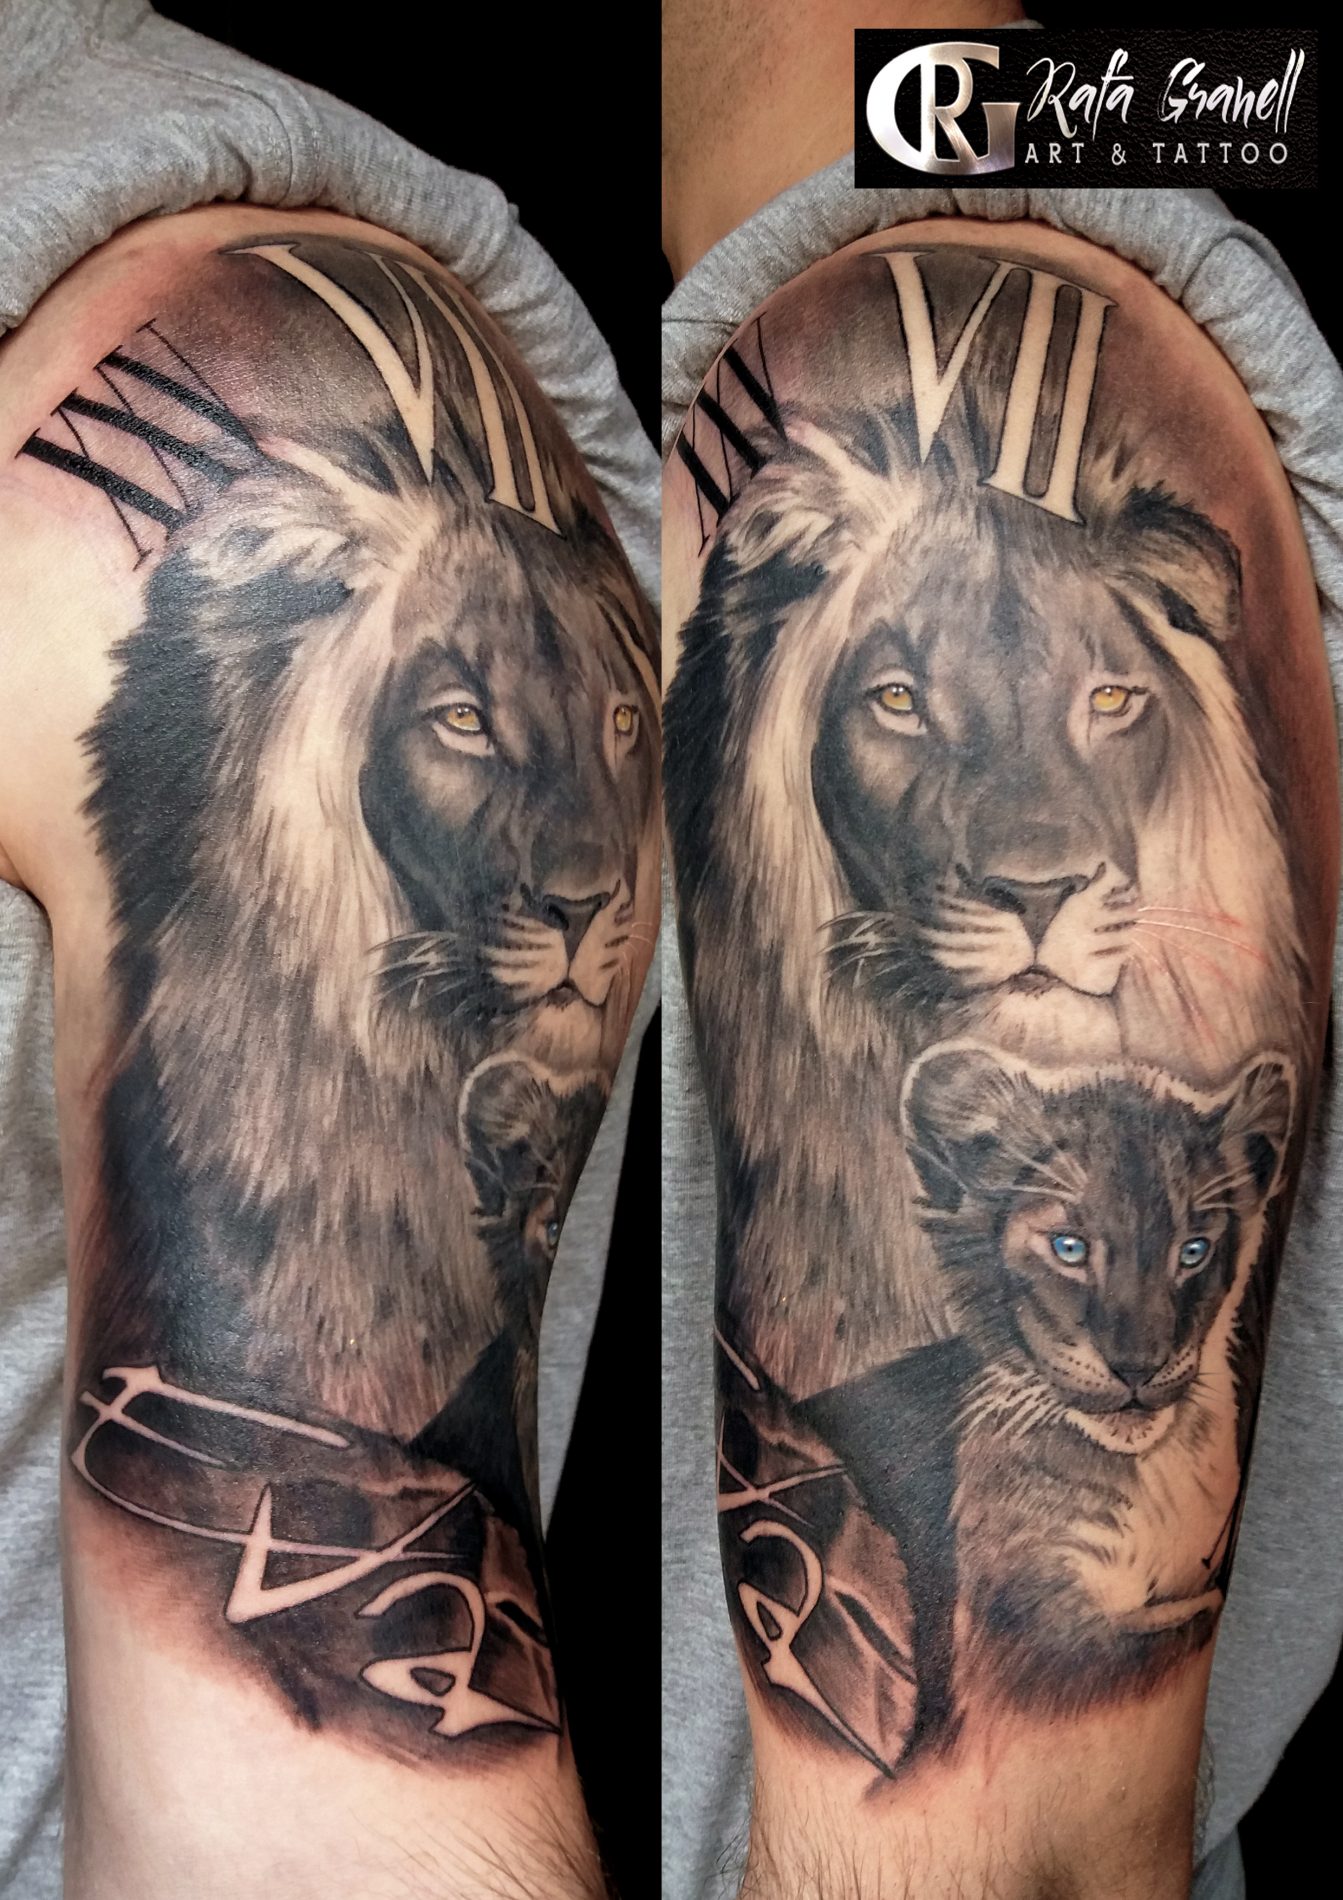 tatuajes#realistas#animales#leones#tattoo#leon#rey#selva#numeros#romanos#realista#brazo#hombro#valencia#tatuador#valenciano#español#tatuadores#valencianos#españoles#mejores#rafa#granell#rgtattoo#